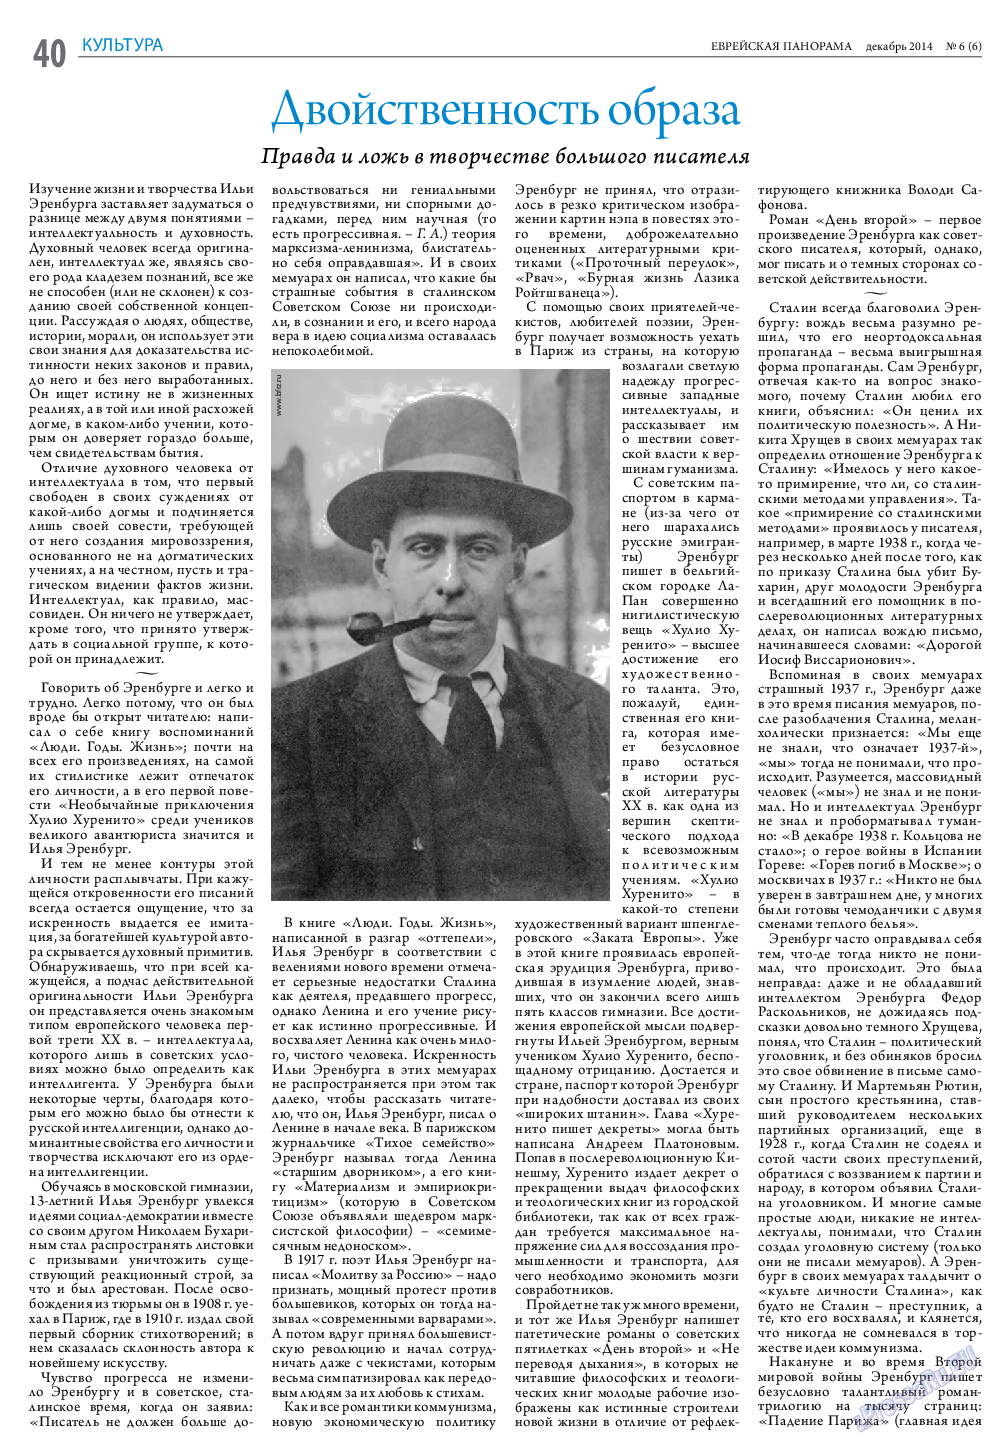 Еврейская панорама, газета. 2014 №6 стр.40